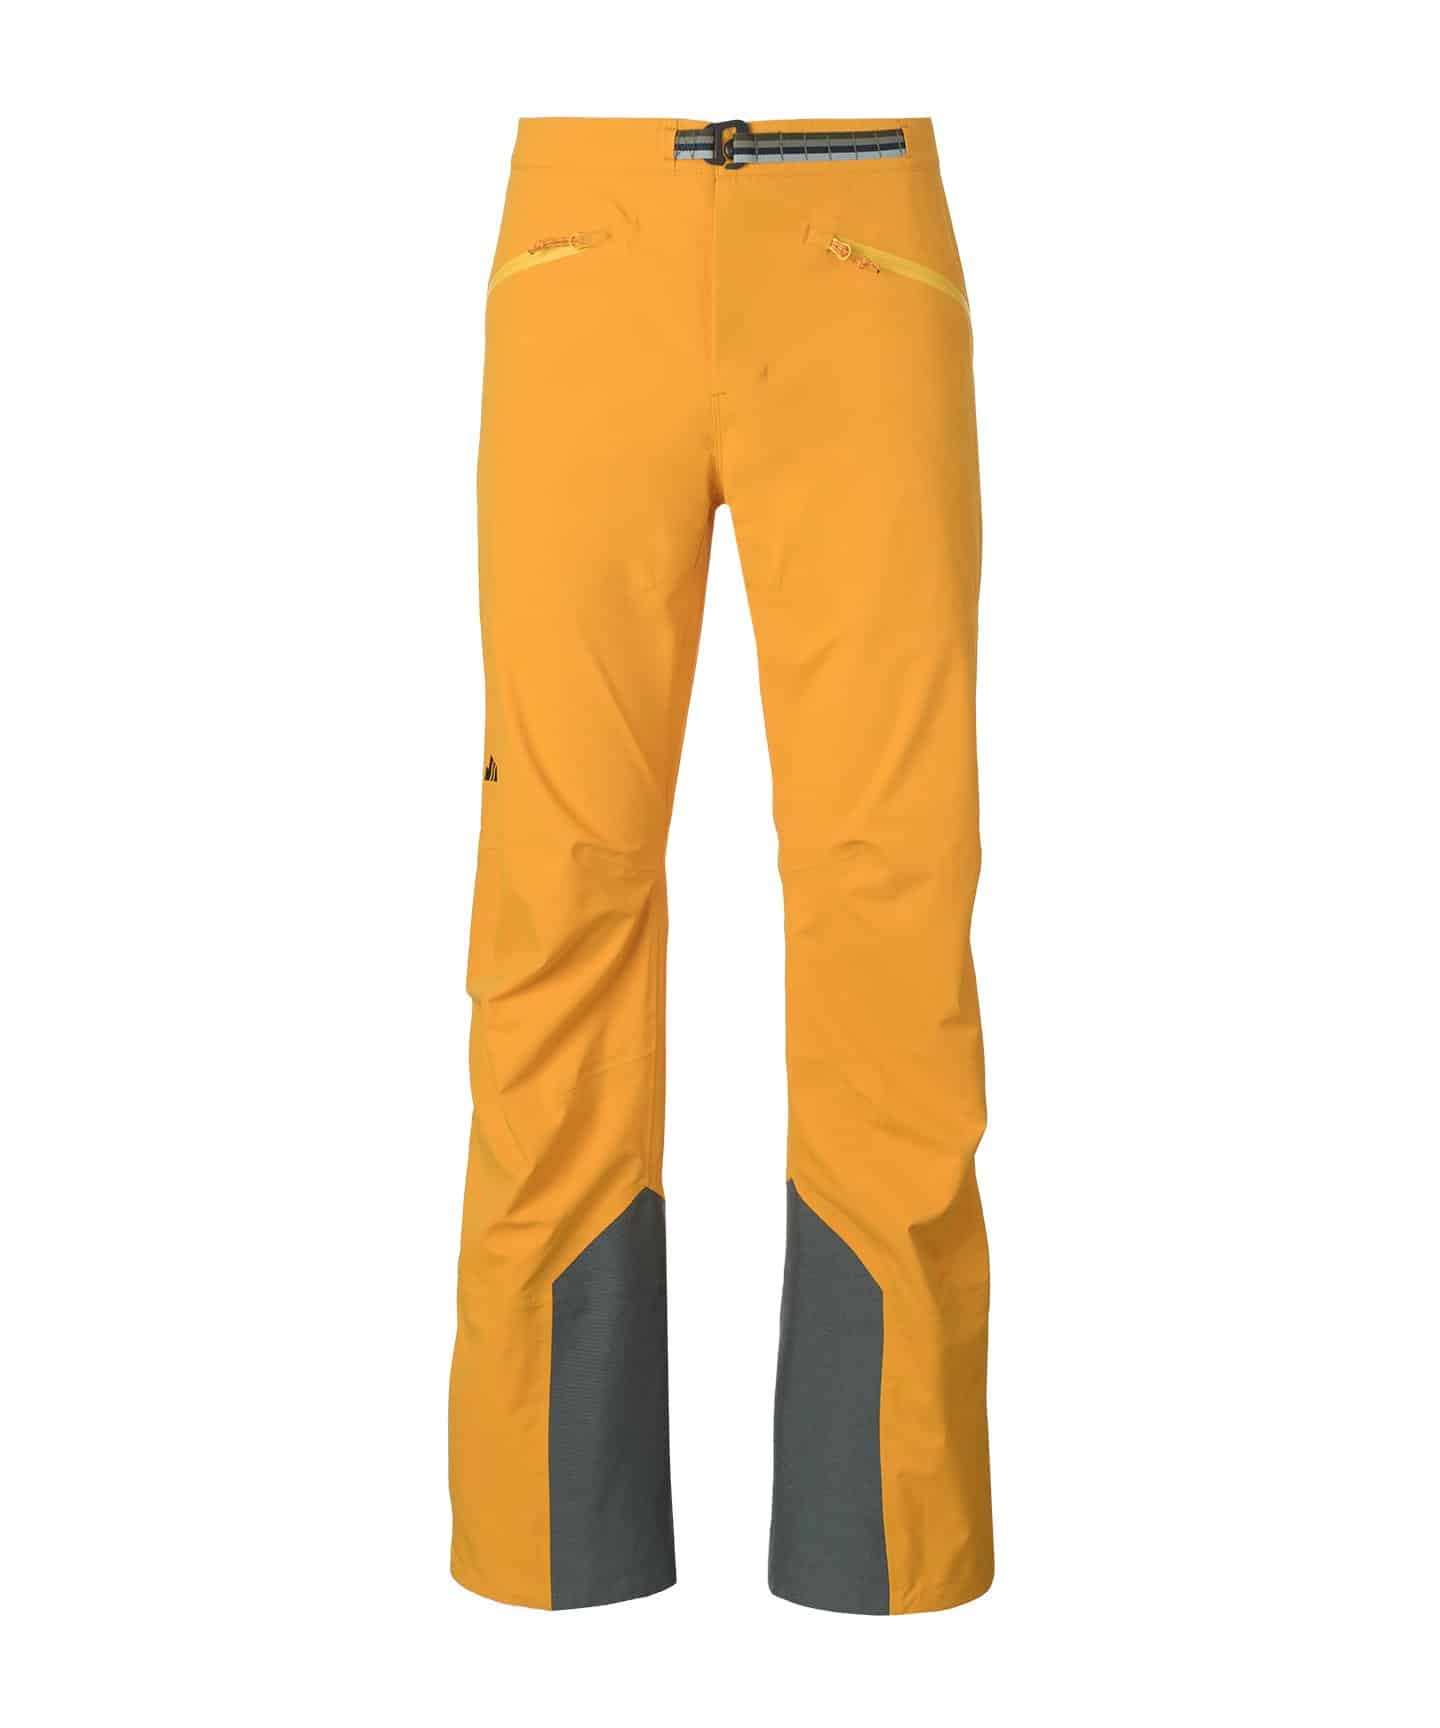 Strafe Outerwear Cham 3L Shell Pant, Best Ski Pants for Men